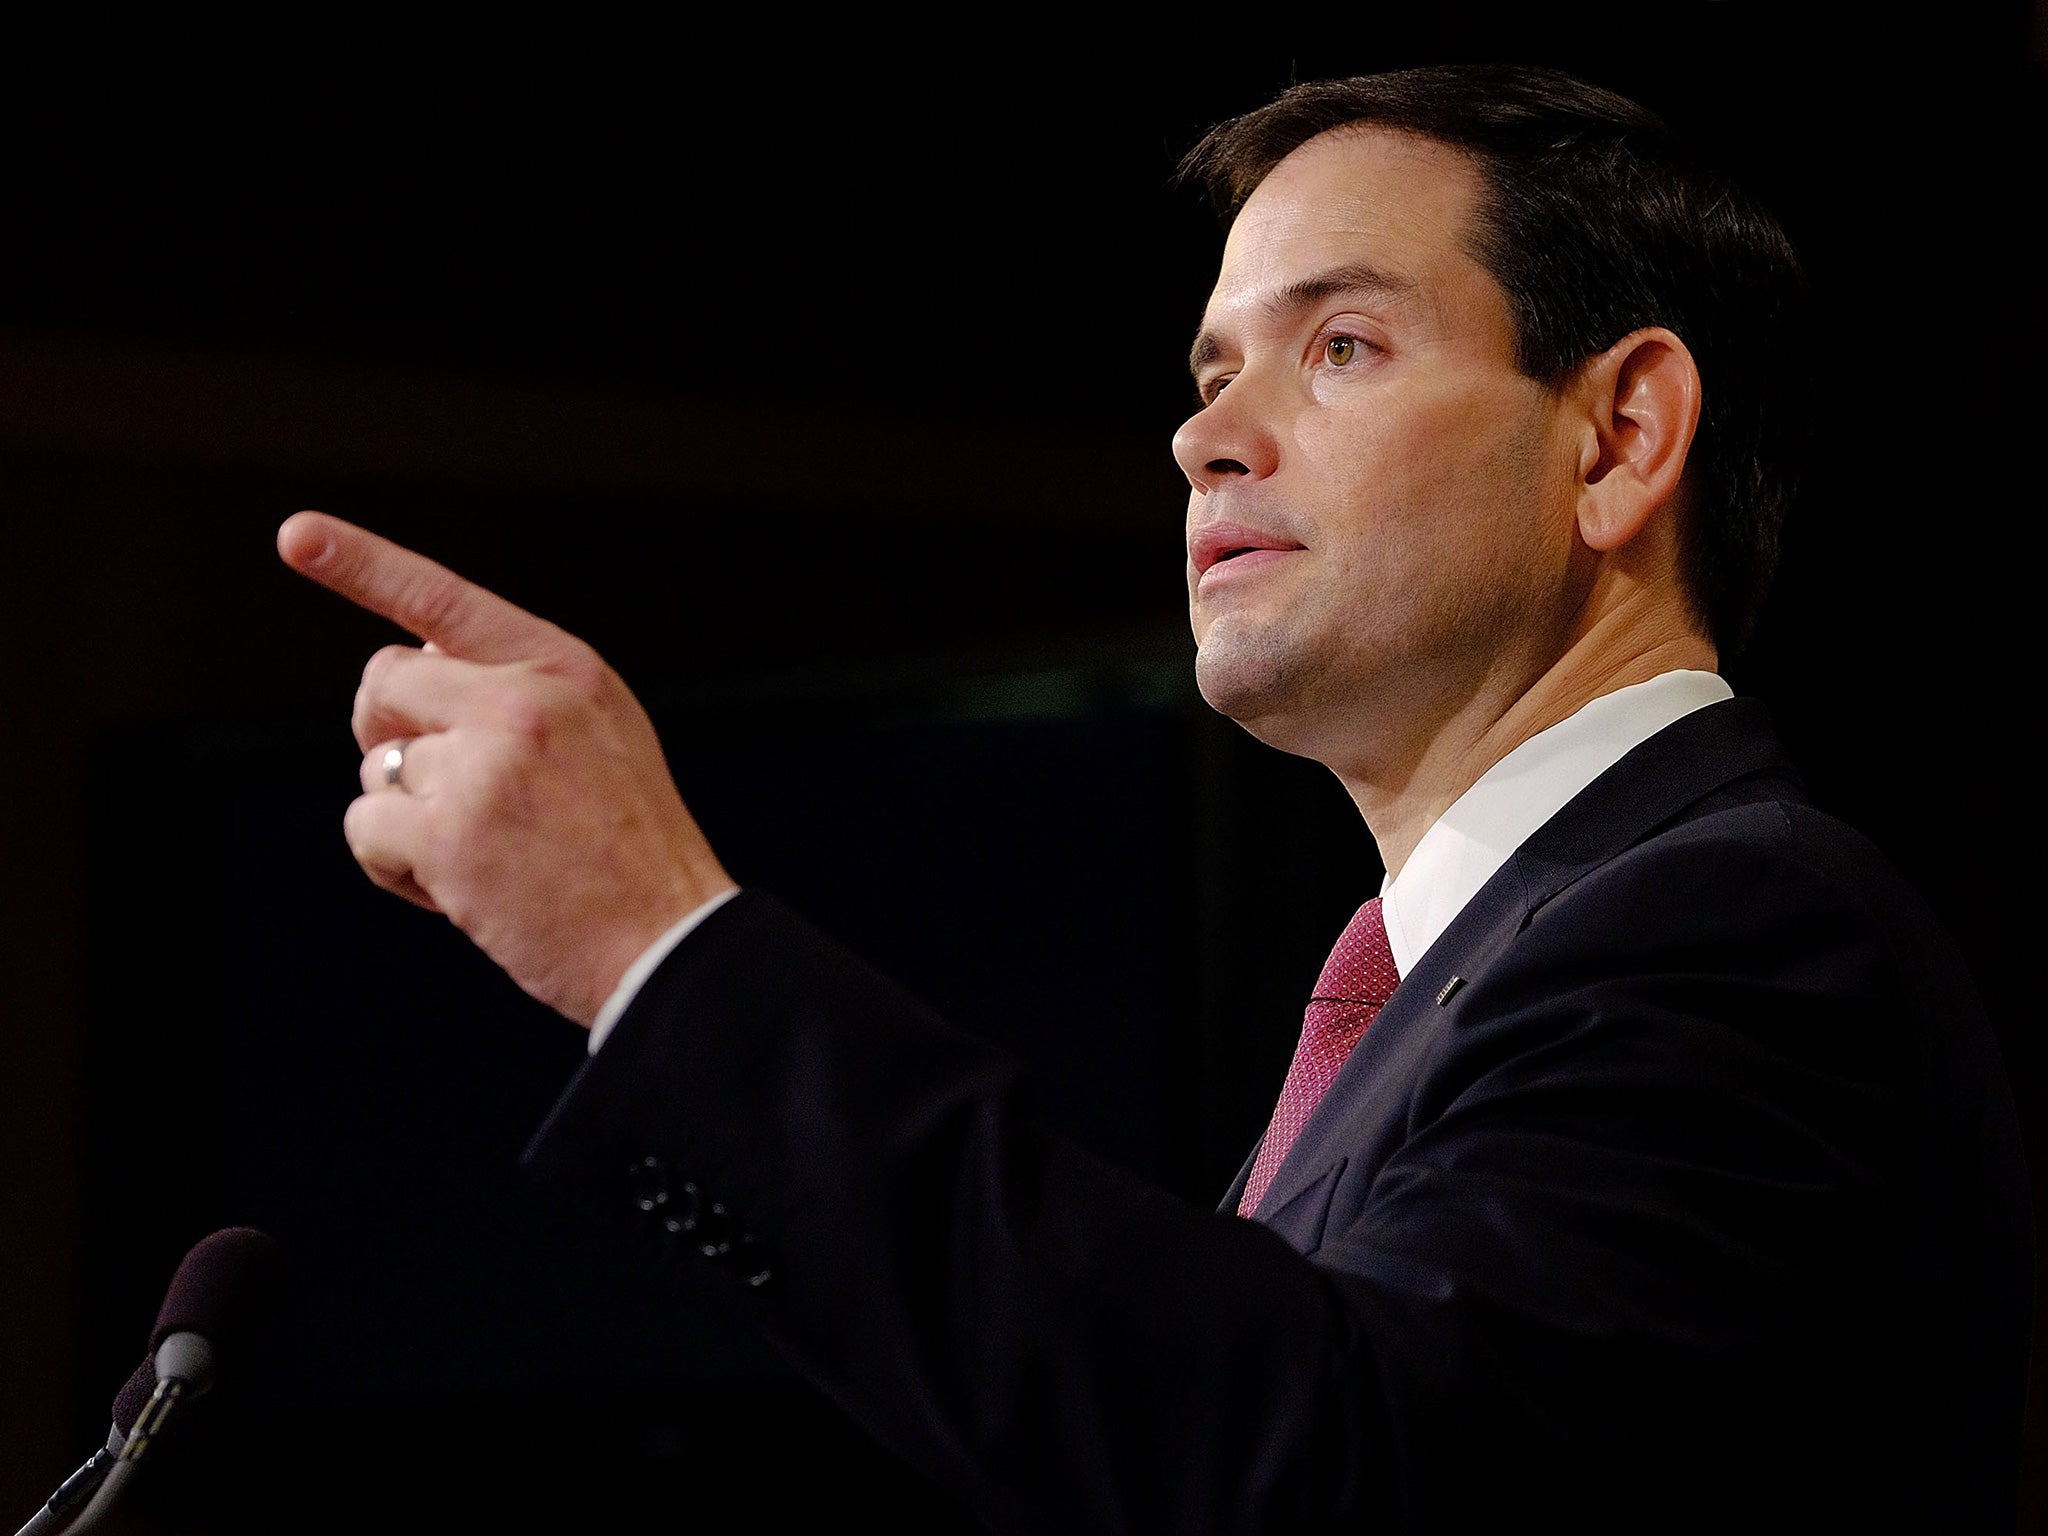 Senator Marco Rubio was the undoubted winner of Wednesday night's political debate